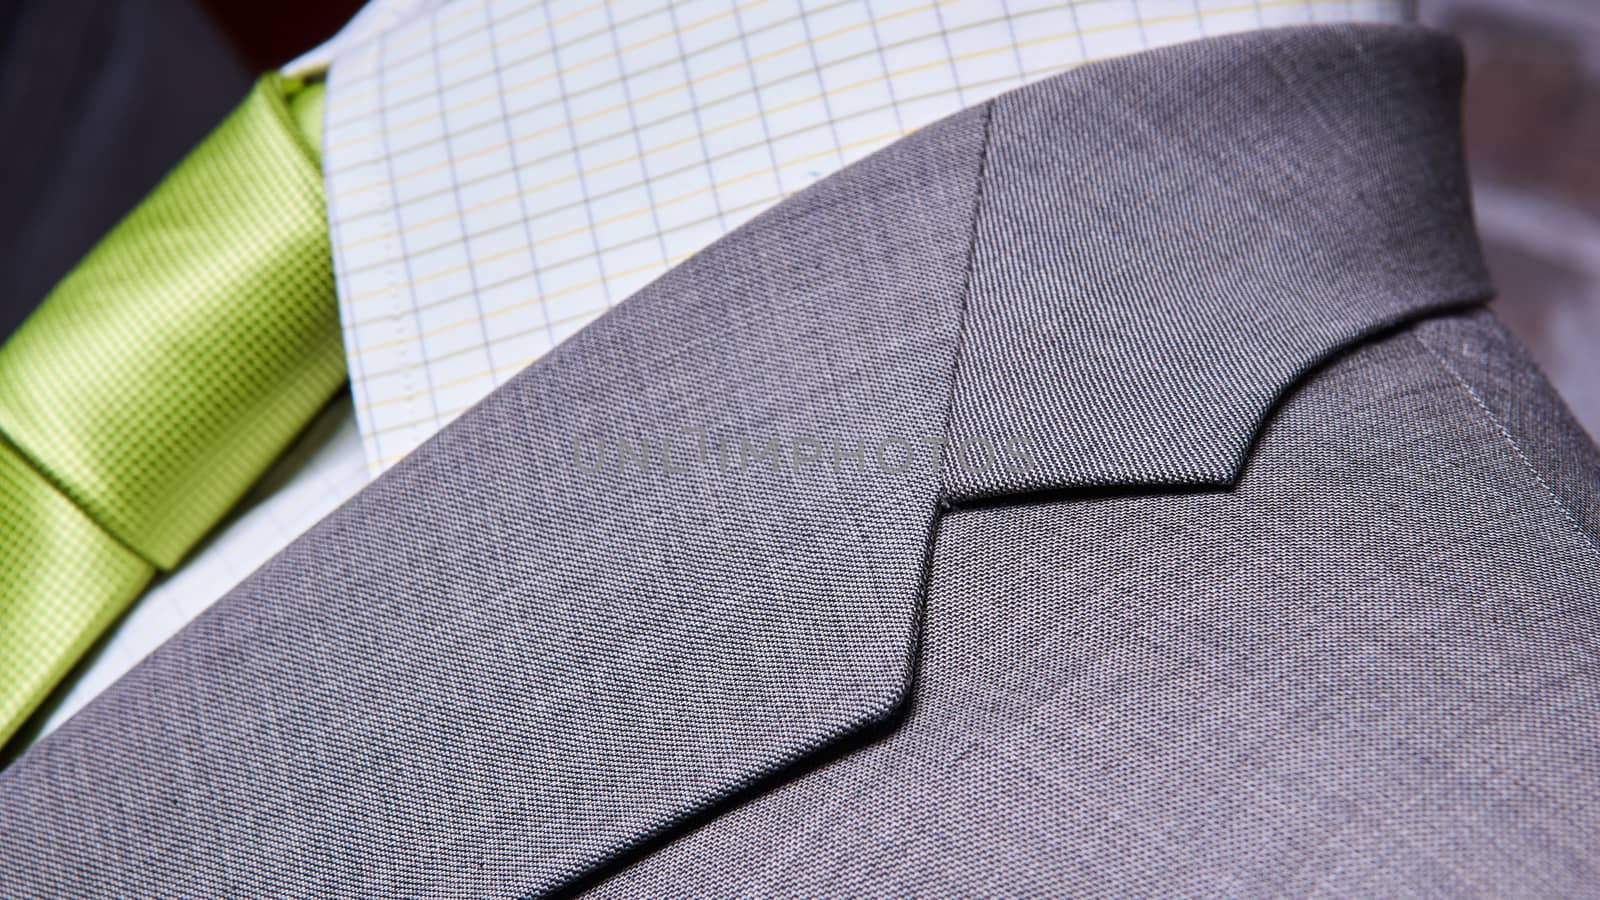 Suit Texture Close Up by sarymsakov